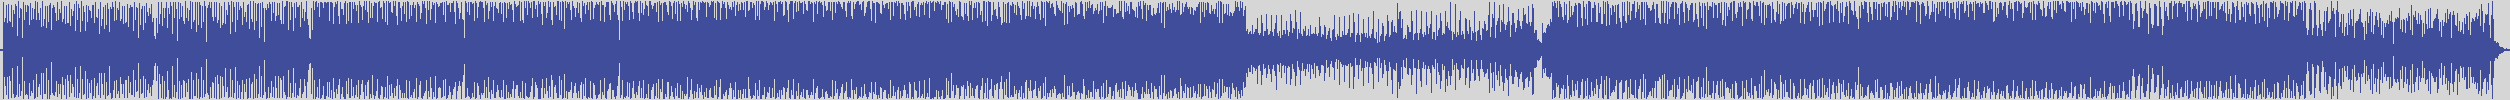 nf_boyz_records [NFY017] Zidan Majer - Push On [Original Mix] audio wave form